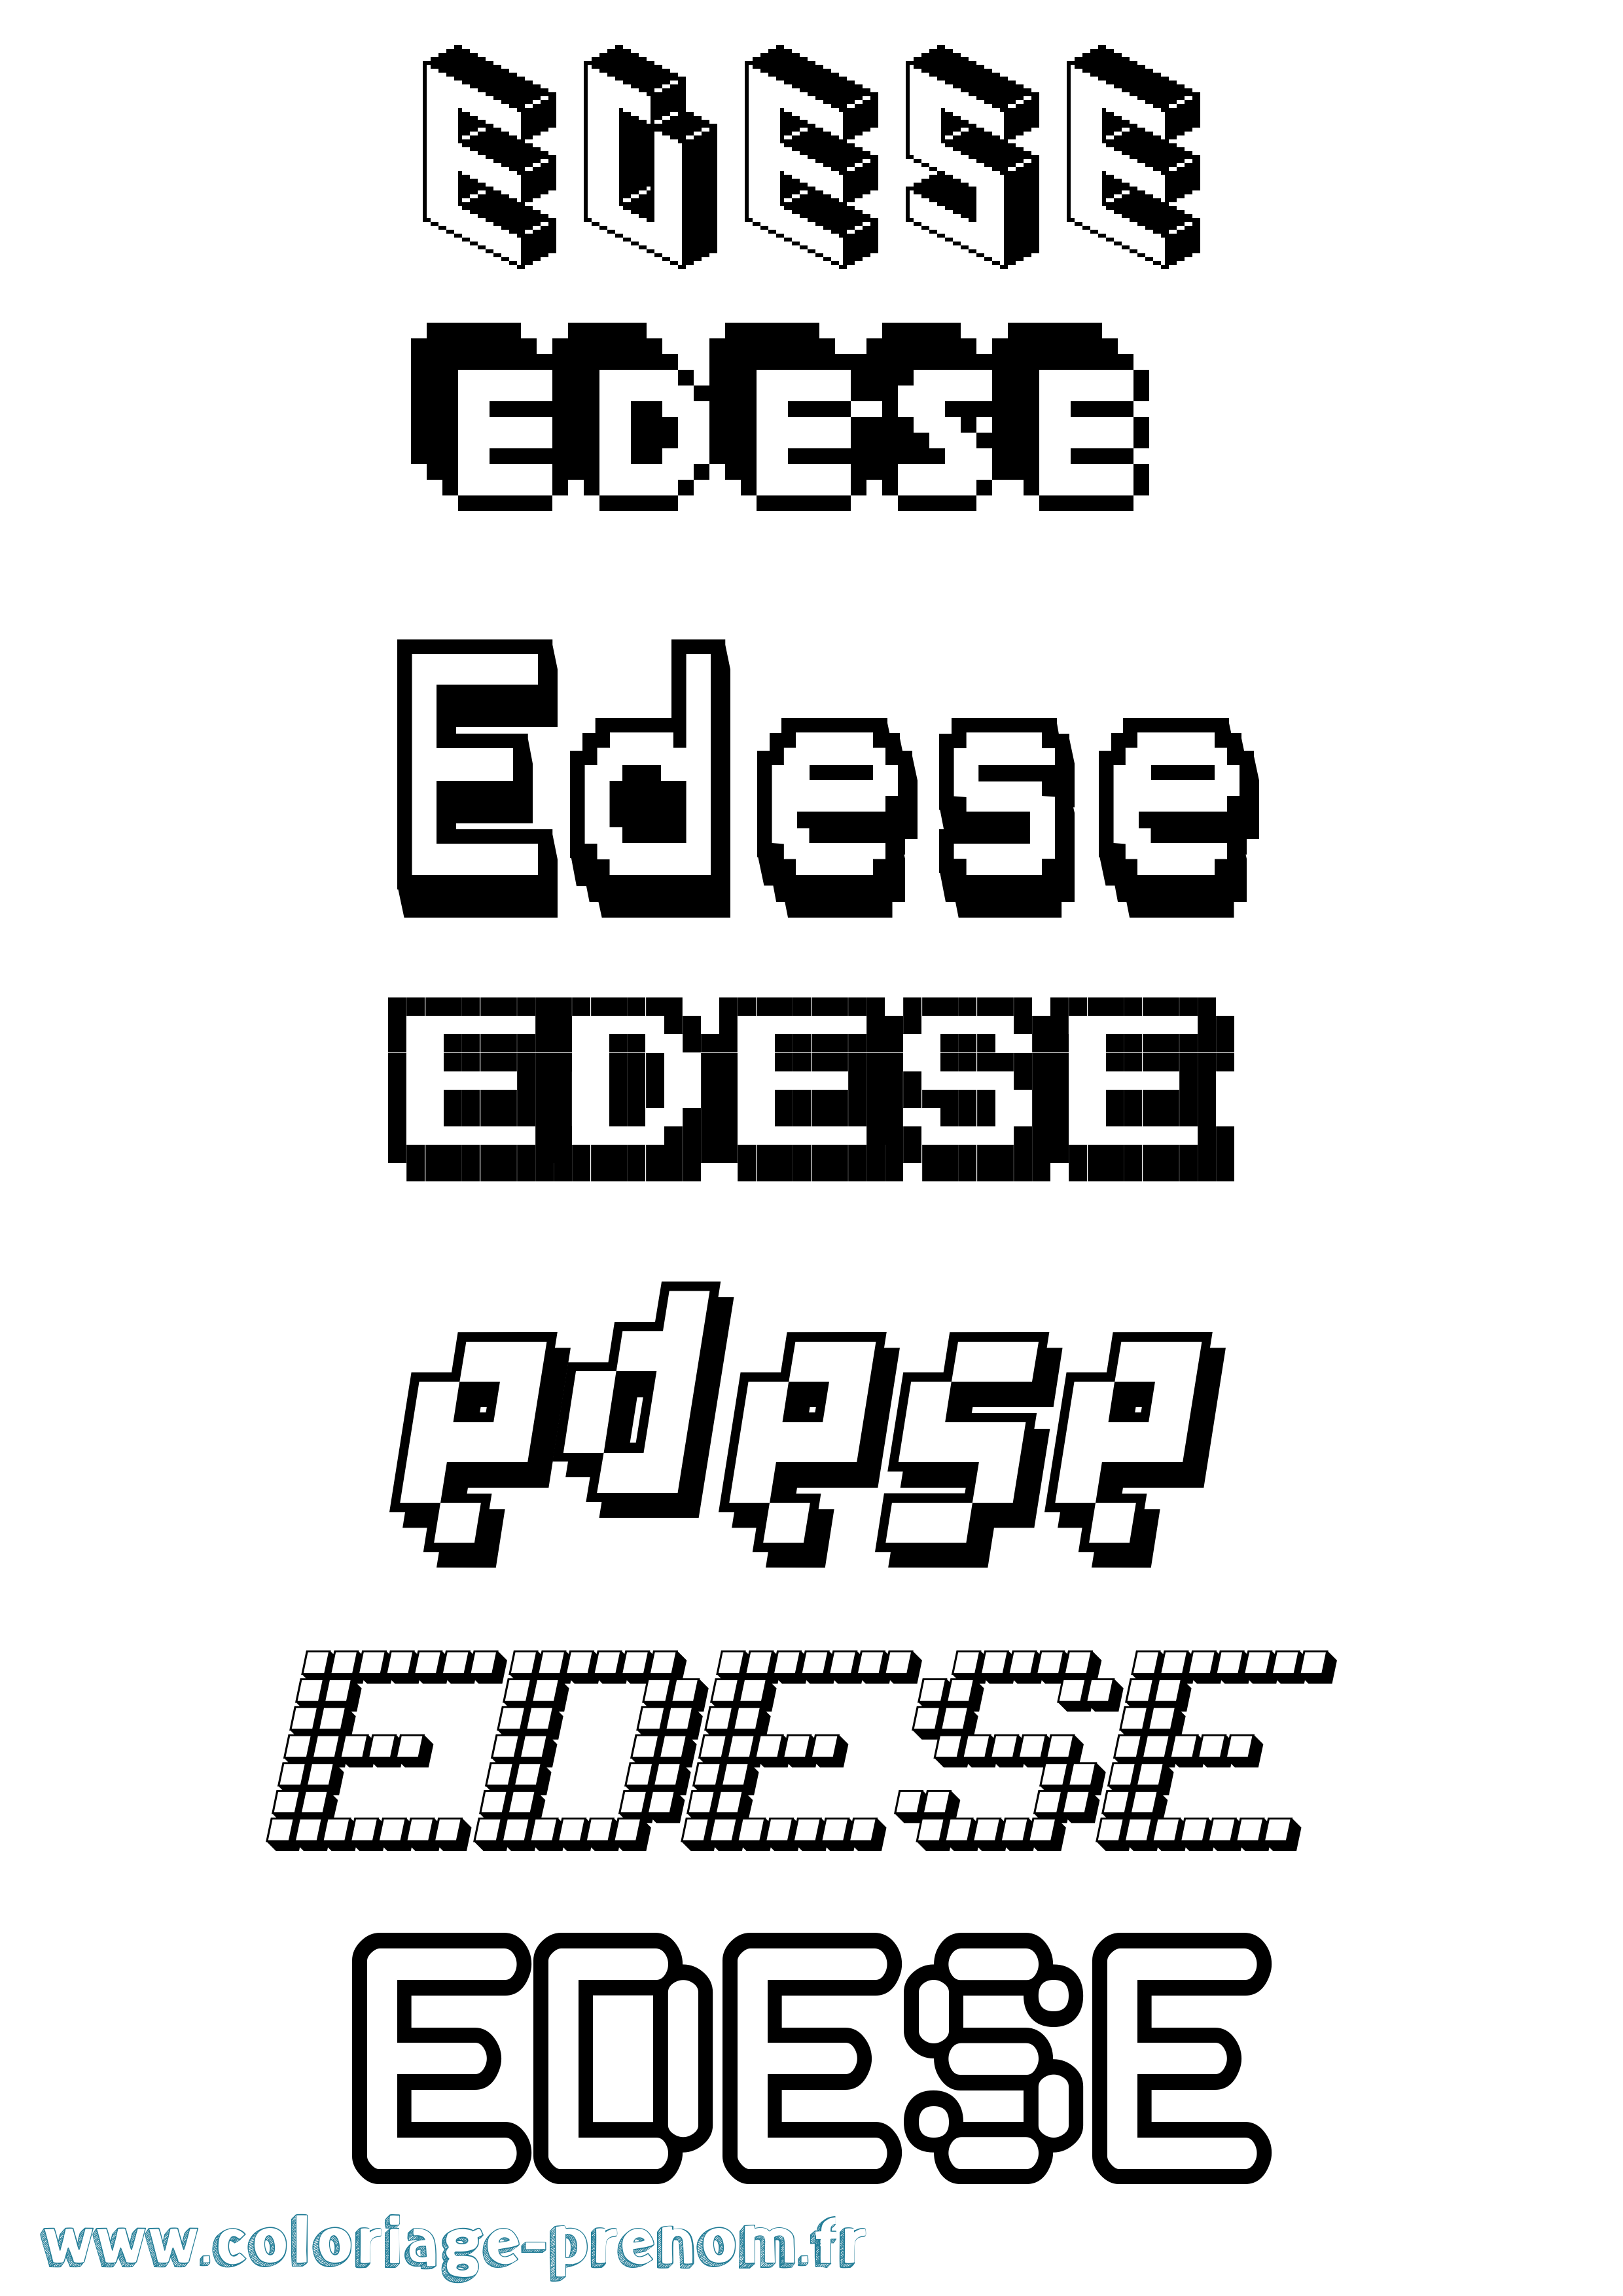 Coloriage prénom Edese Pixel